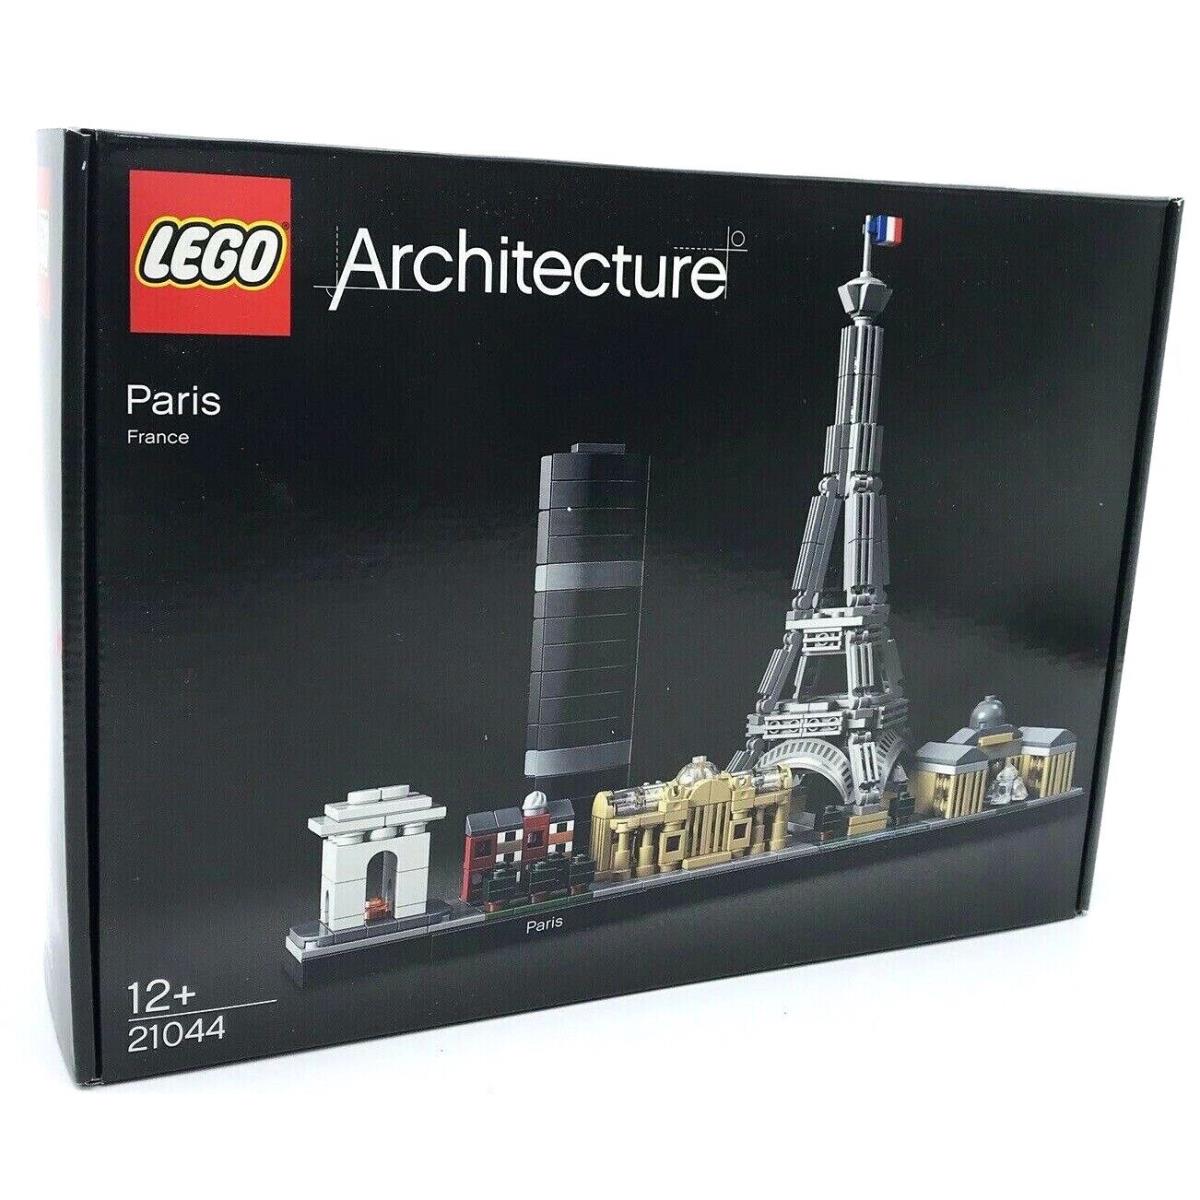 Lego Paris 21044 Architecture Set